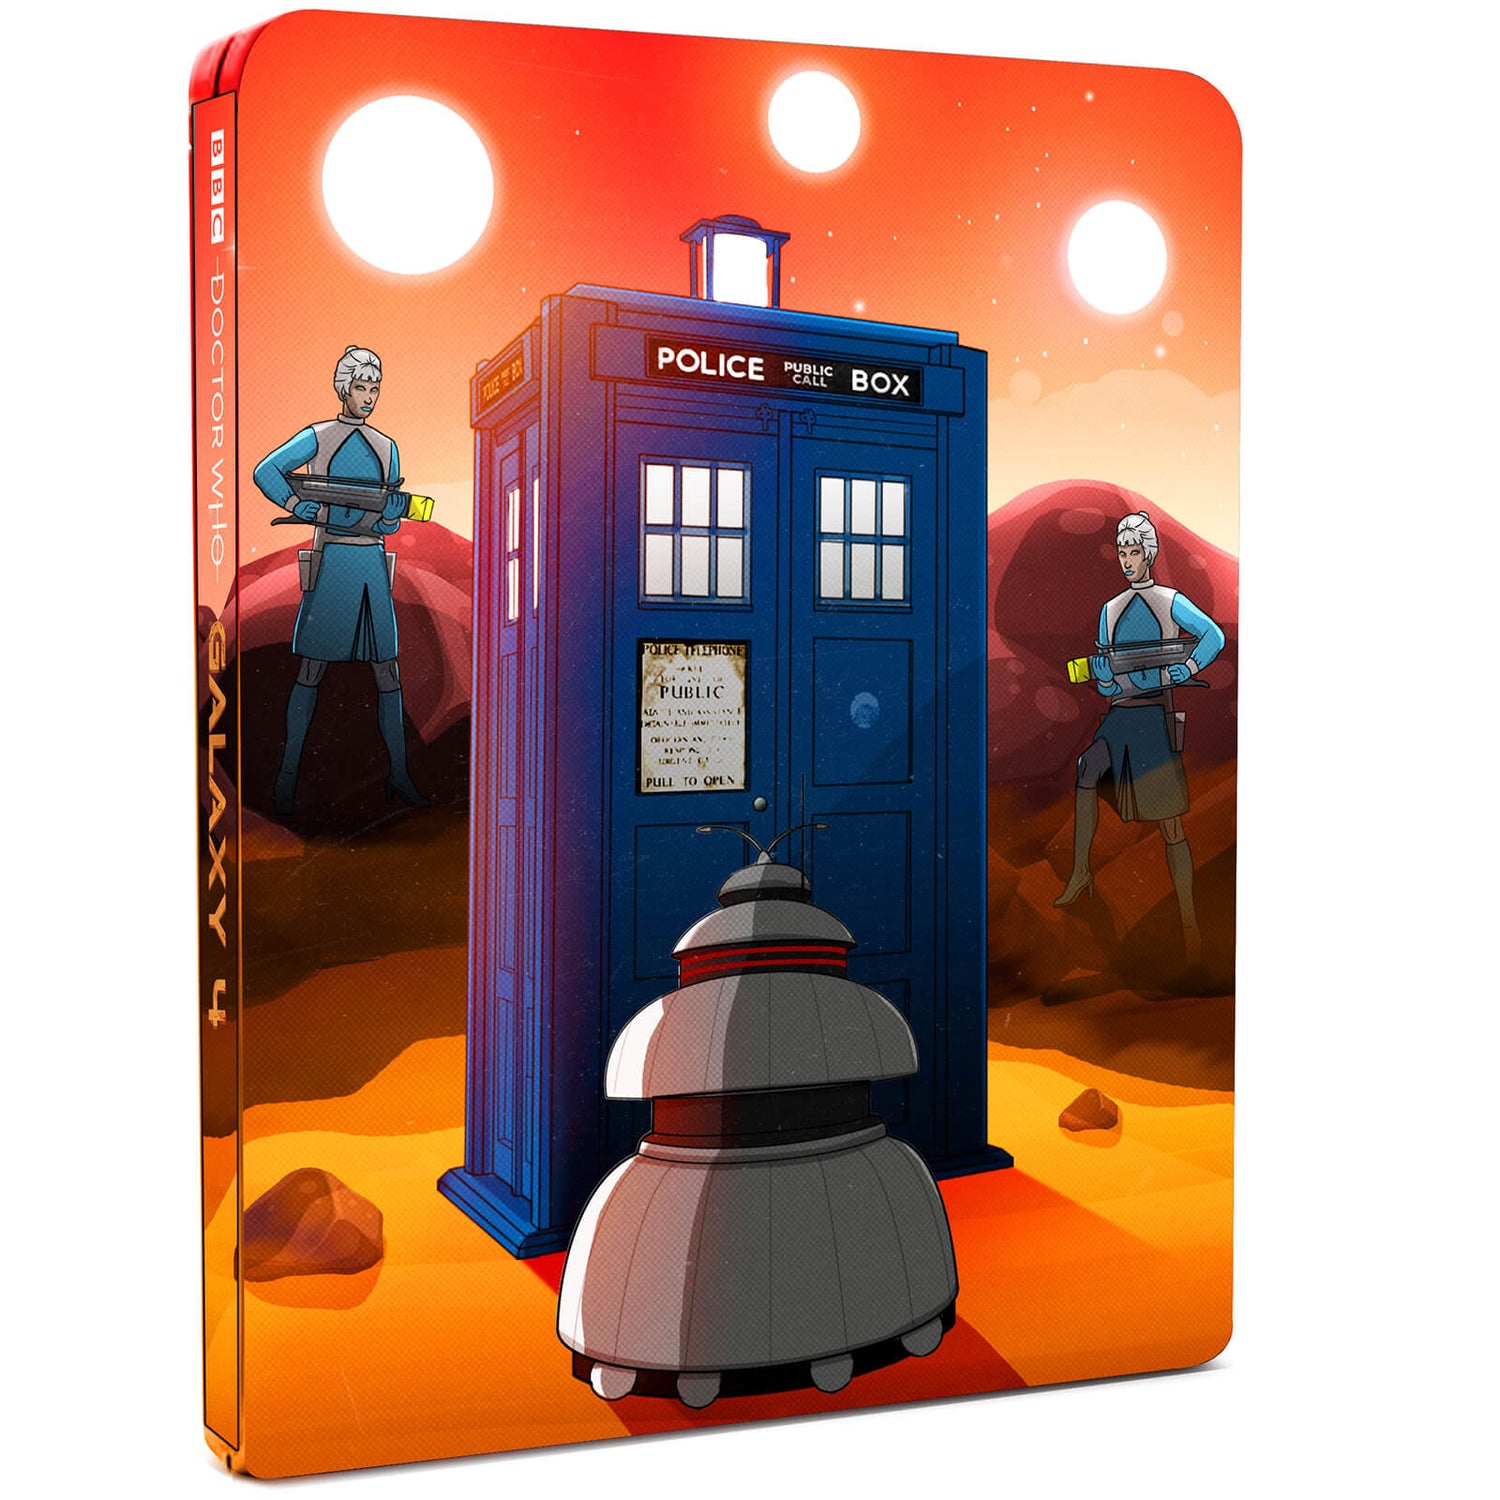 Doctor Who - Galaxy 4 (Animation) BD Steelbook